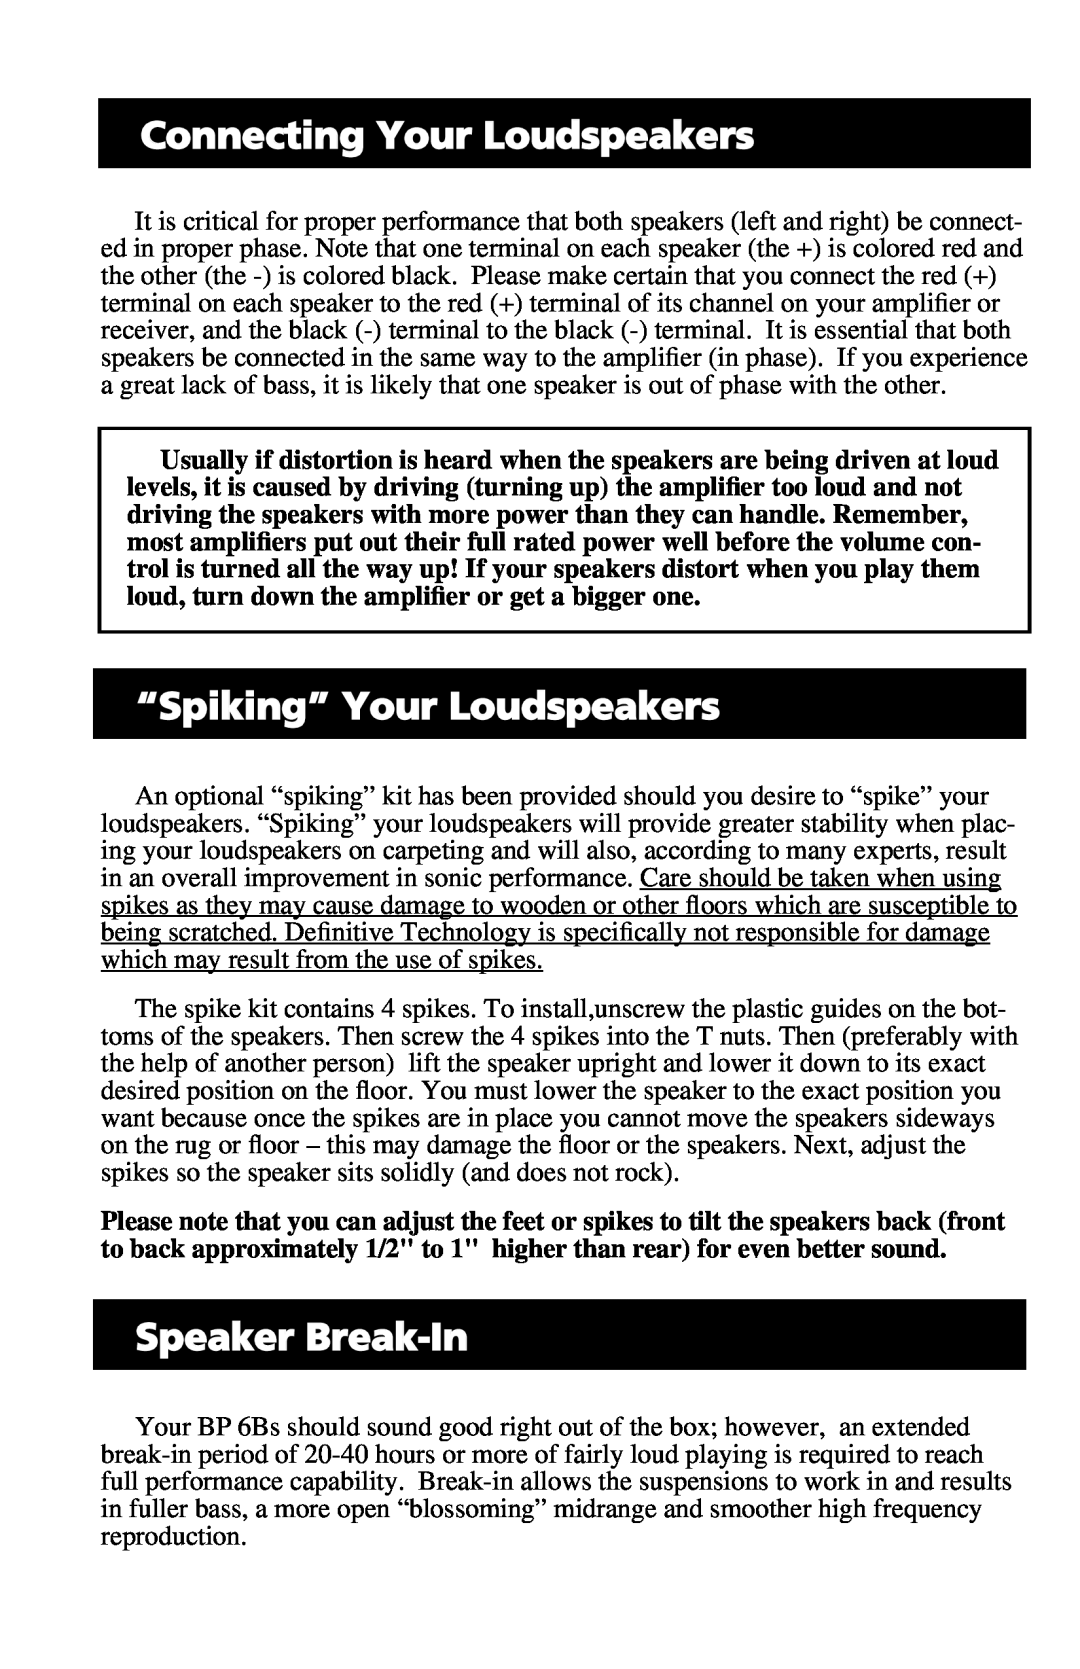 Definitive Technology BP 6B manual Connecting Your Loudspeakers, “Spiking” Your Loudspeakers, Speaker Break-In 